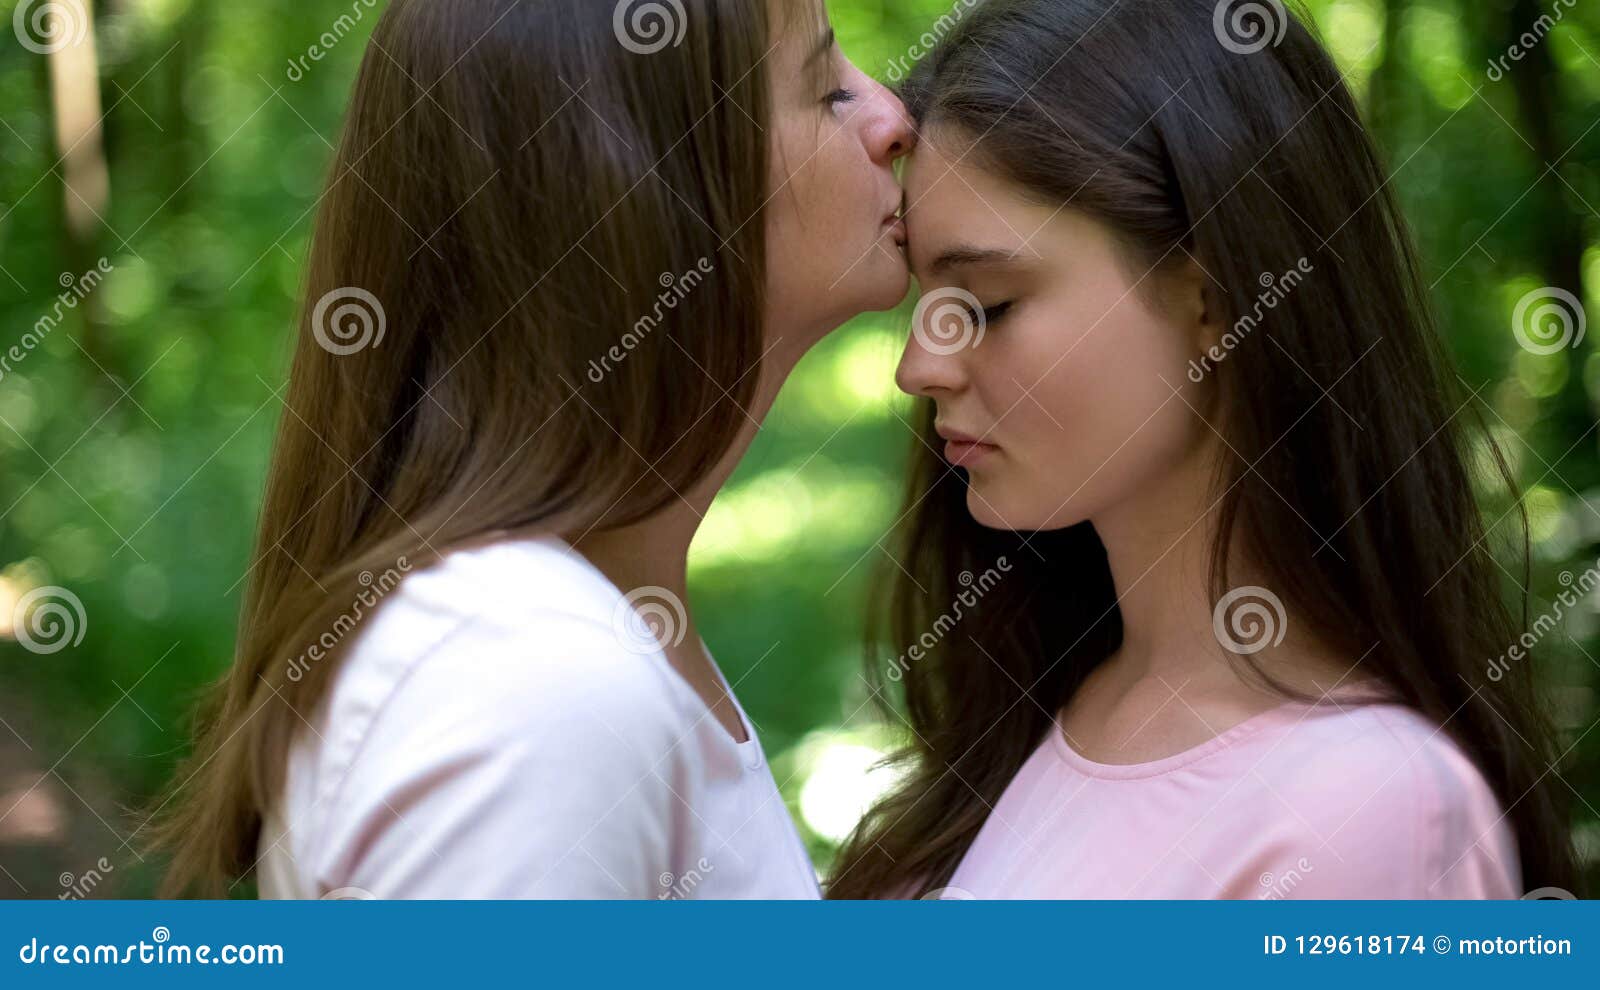 photo gentle lesbian kissing